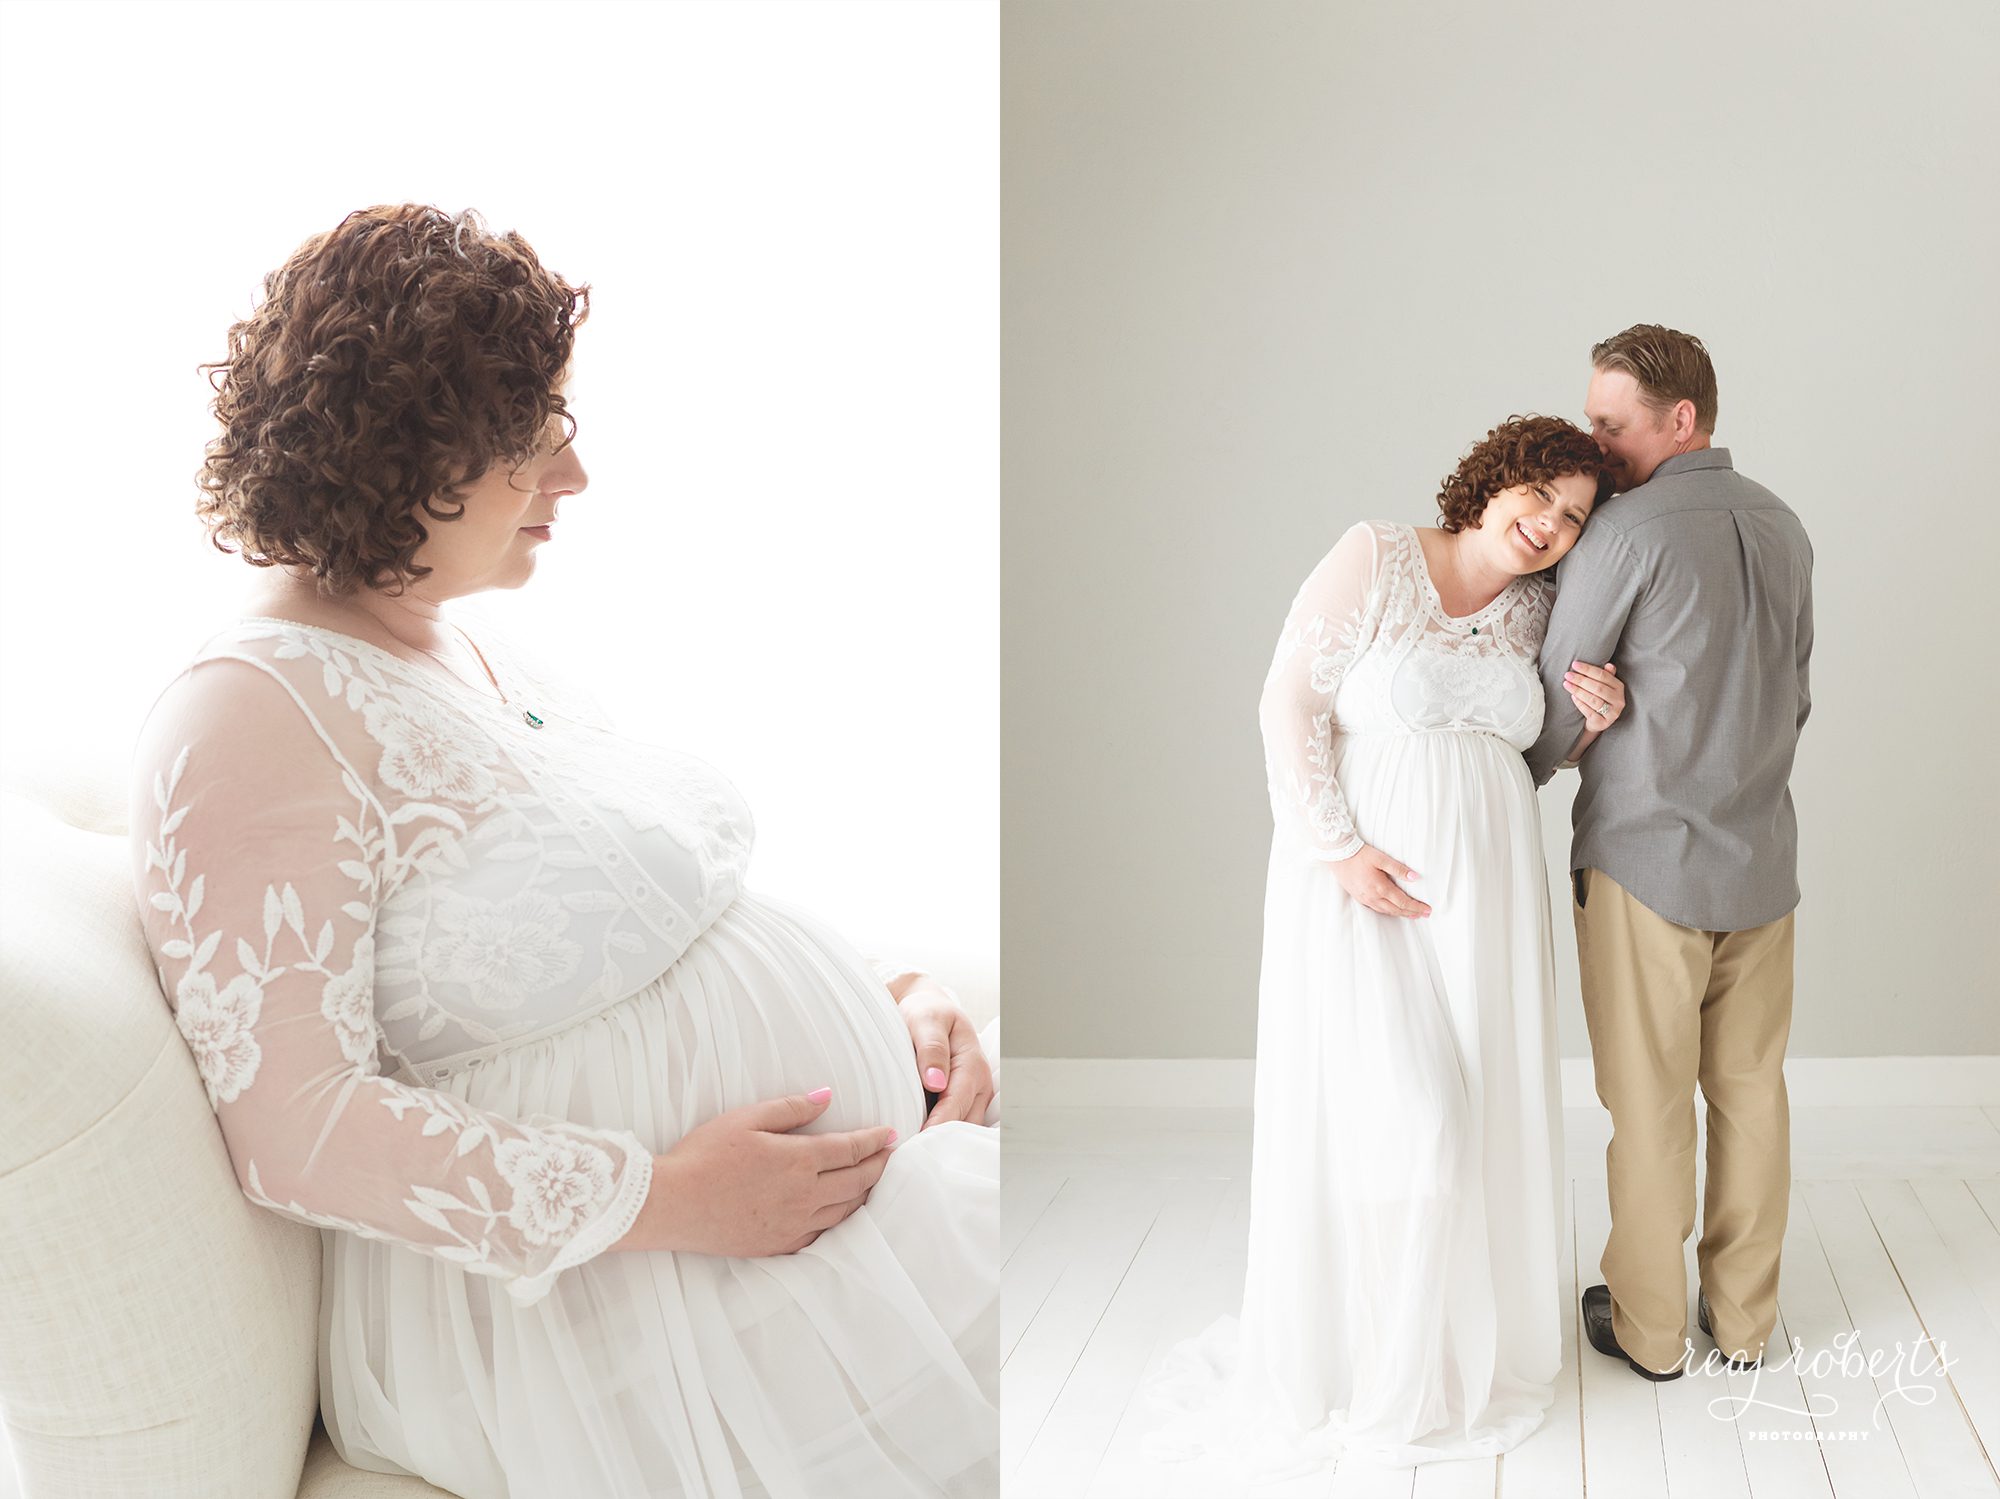 maternity photography awaiting baby boy | Reaj Roberts Photography